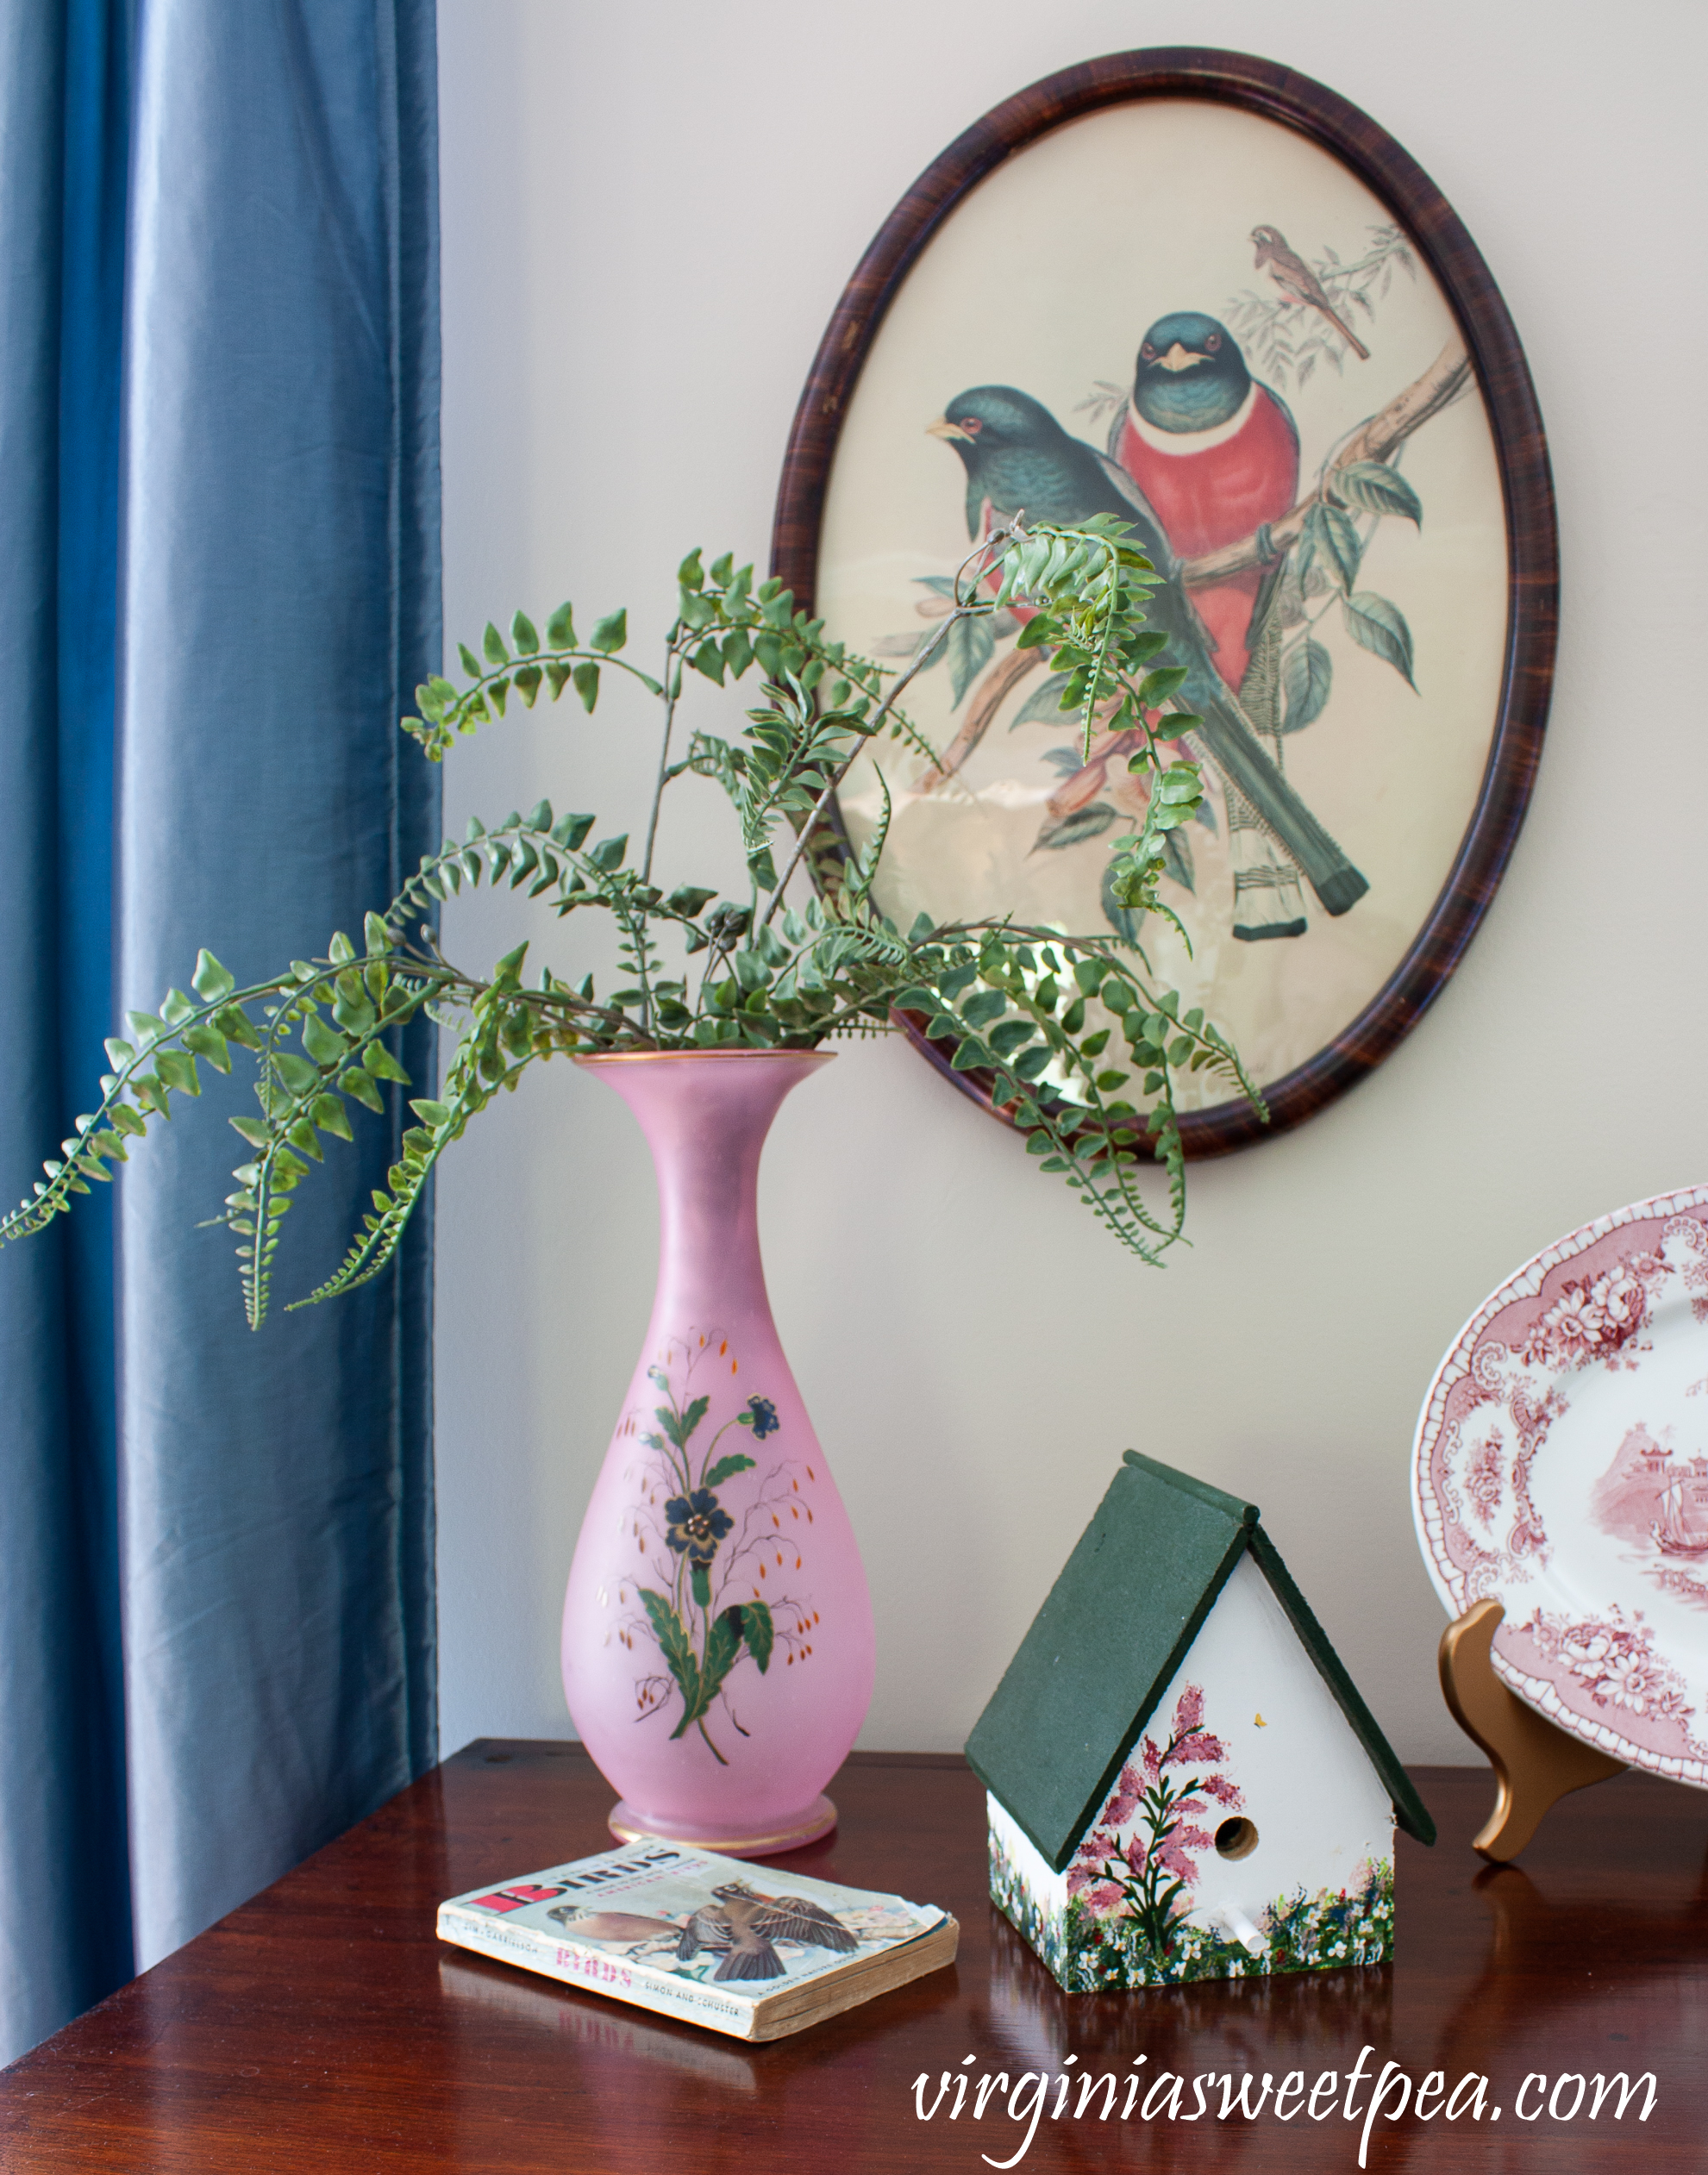 Handmade painted birdhouse, vintage bird field guide, vintage pink vase with ferns